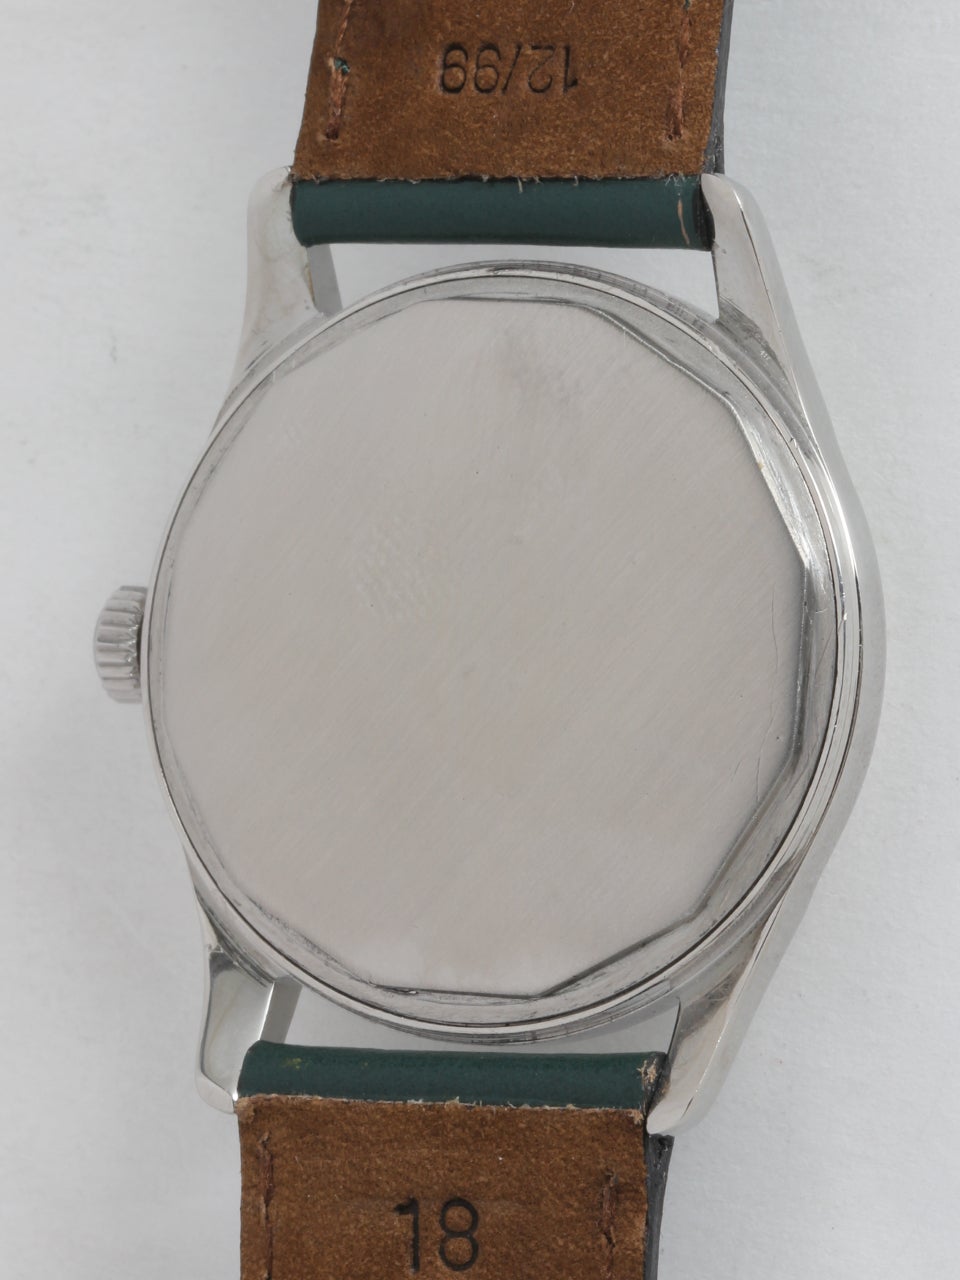 Men's Longines Stainless Steel Wristwatch circa 1950s